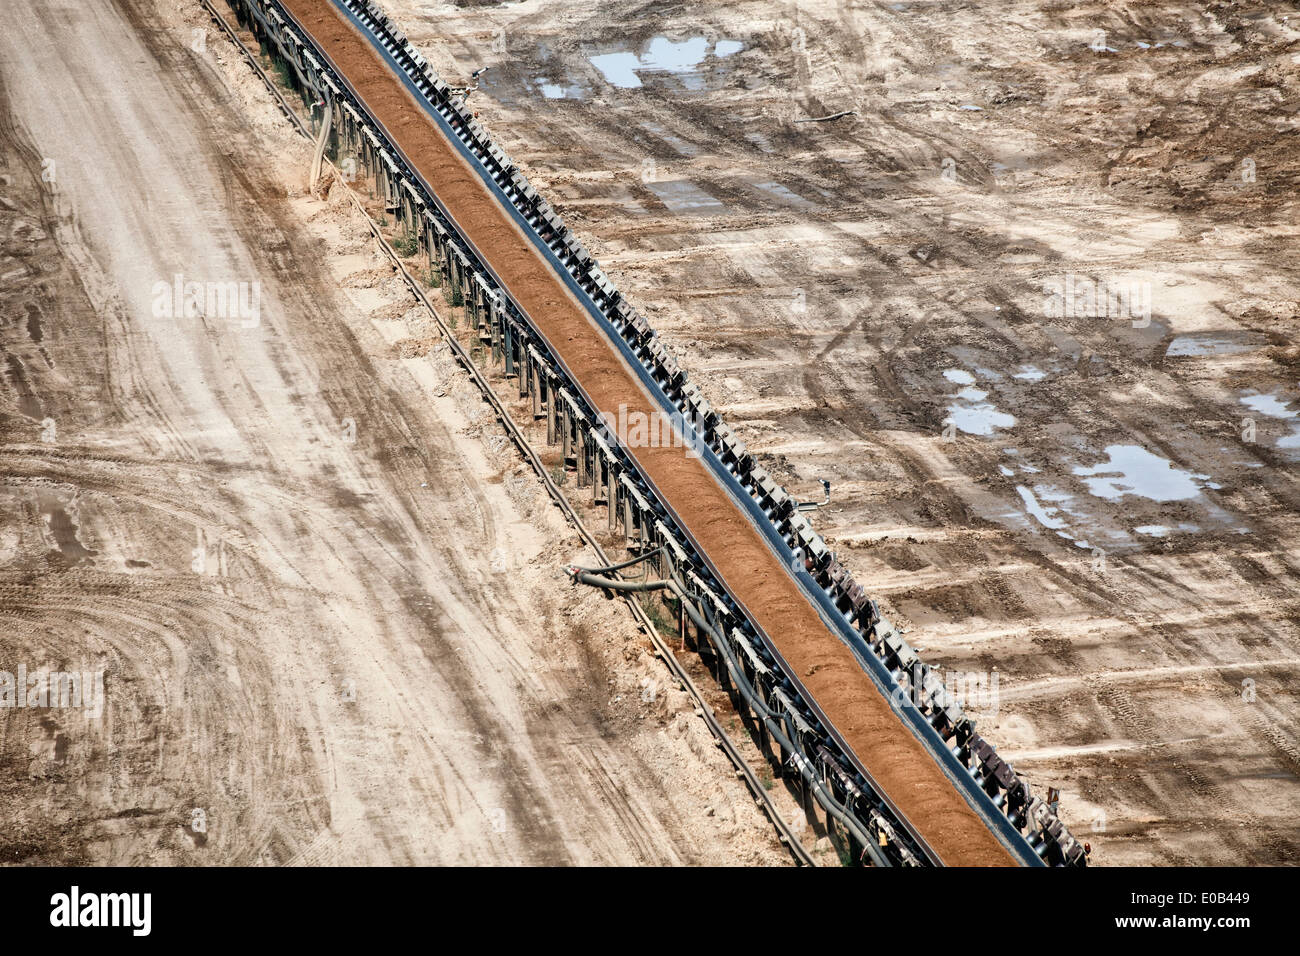 Germany, North Rhine-Westphalia, Garzweiler surface mine, Conveyor belt with coal Stock Photo